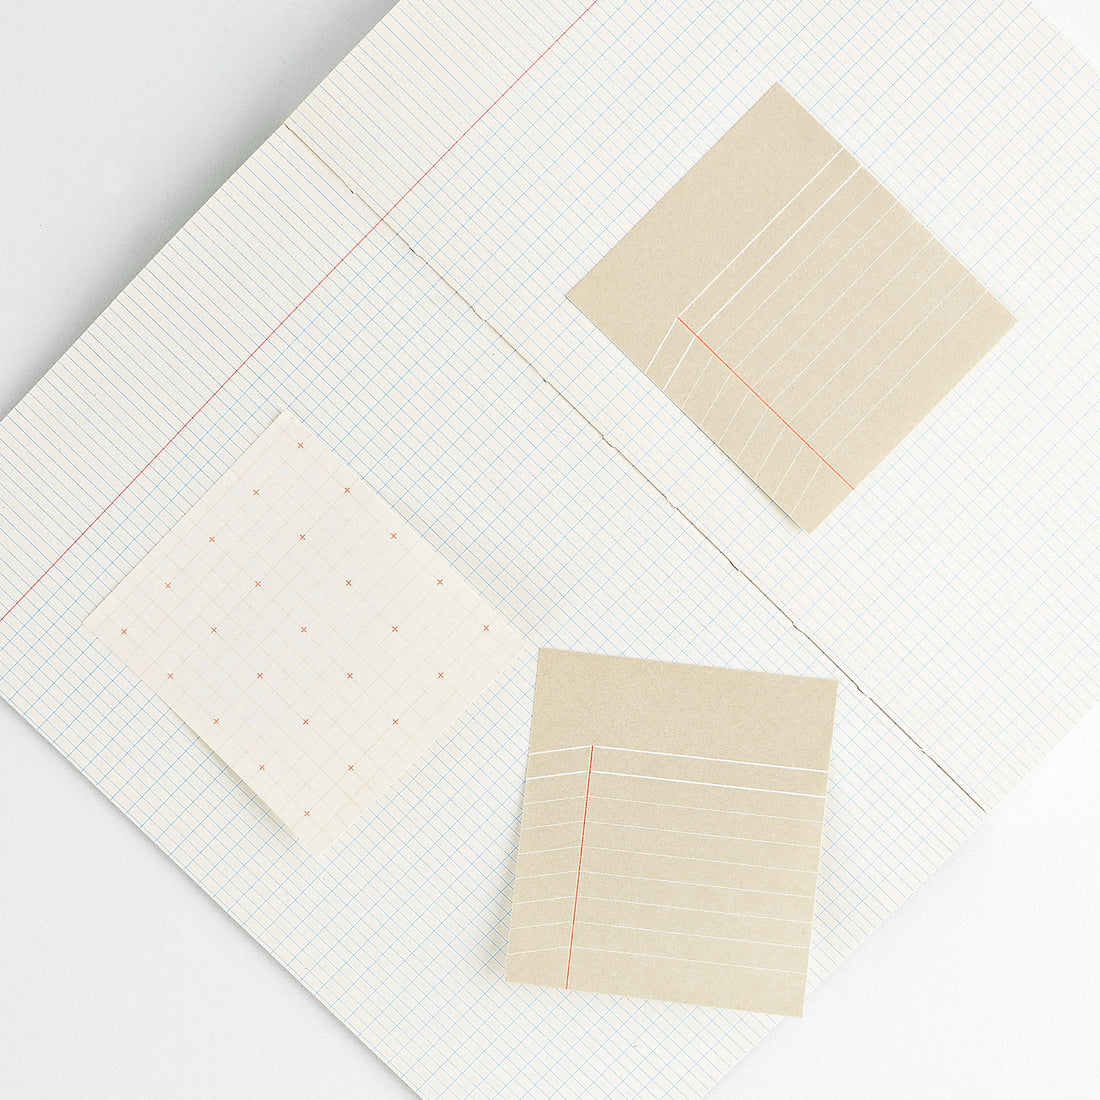 Paperways Paperways Gluememo Duo Cross Grid Sticky Notes 